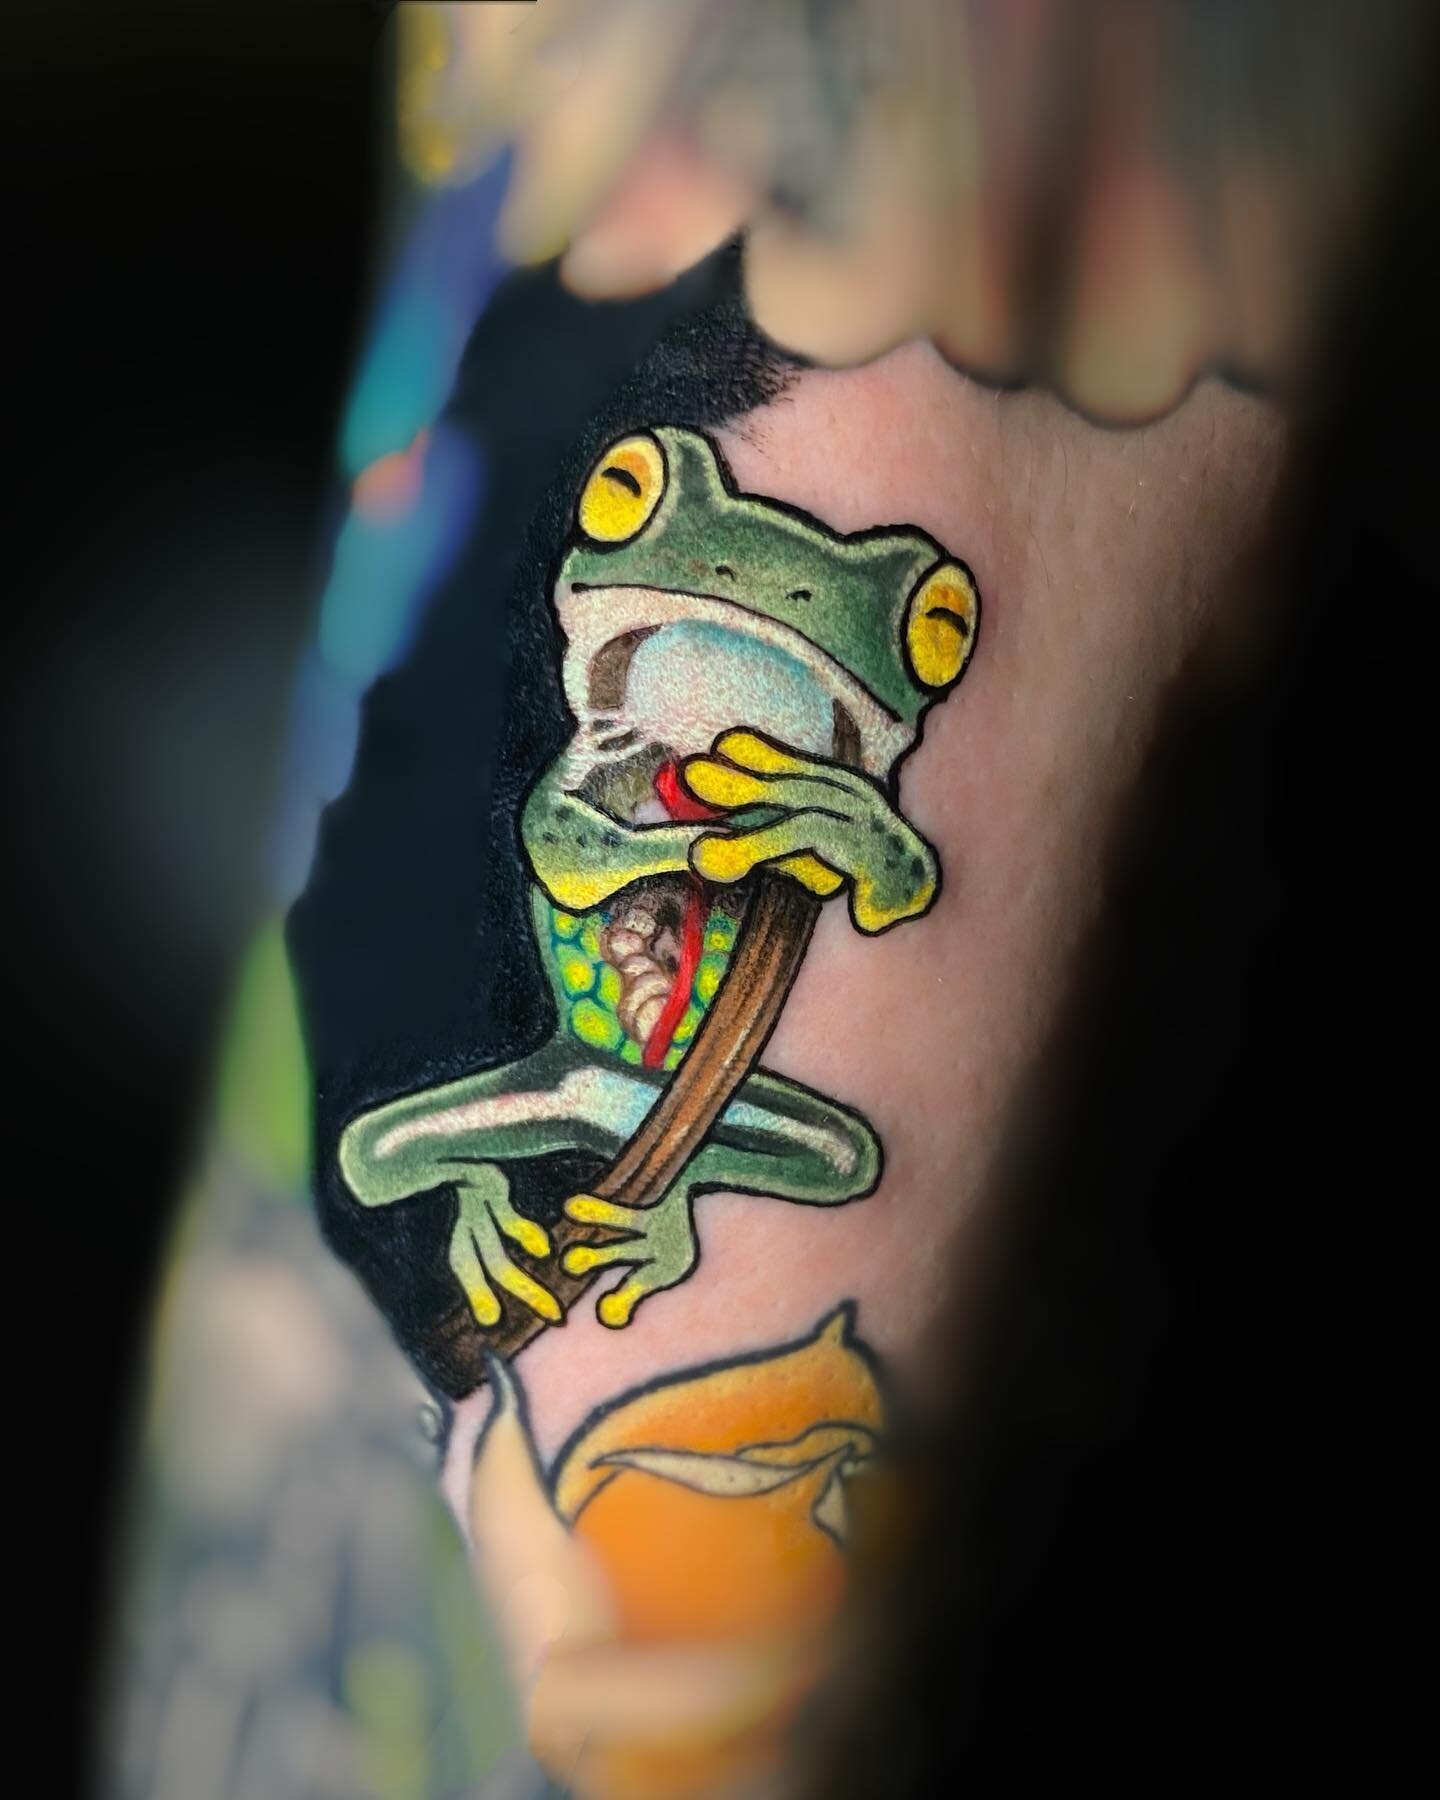 Little glass frog filler, adding more little fellas this week 🐸

#frog #frogtattoo #tattoo #tattooshop